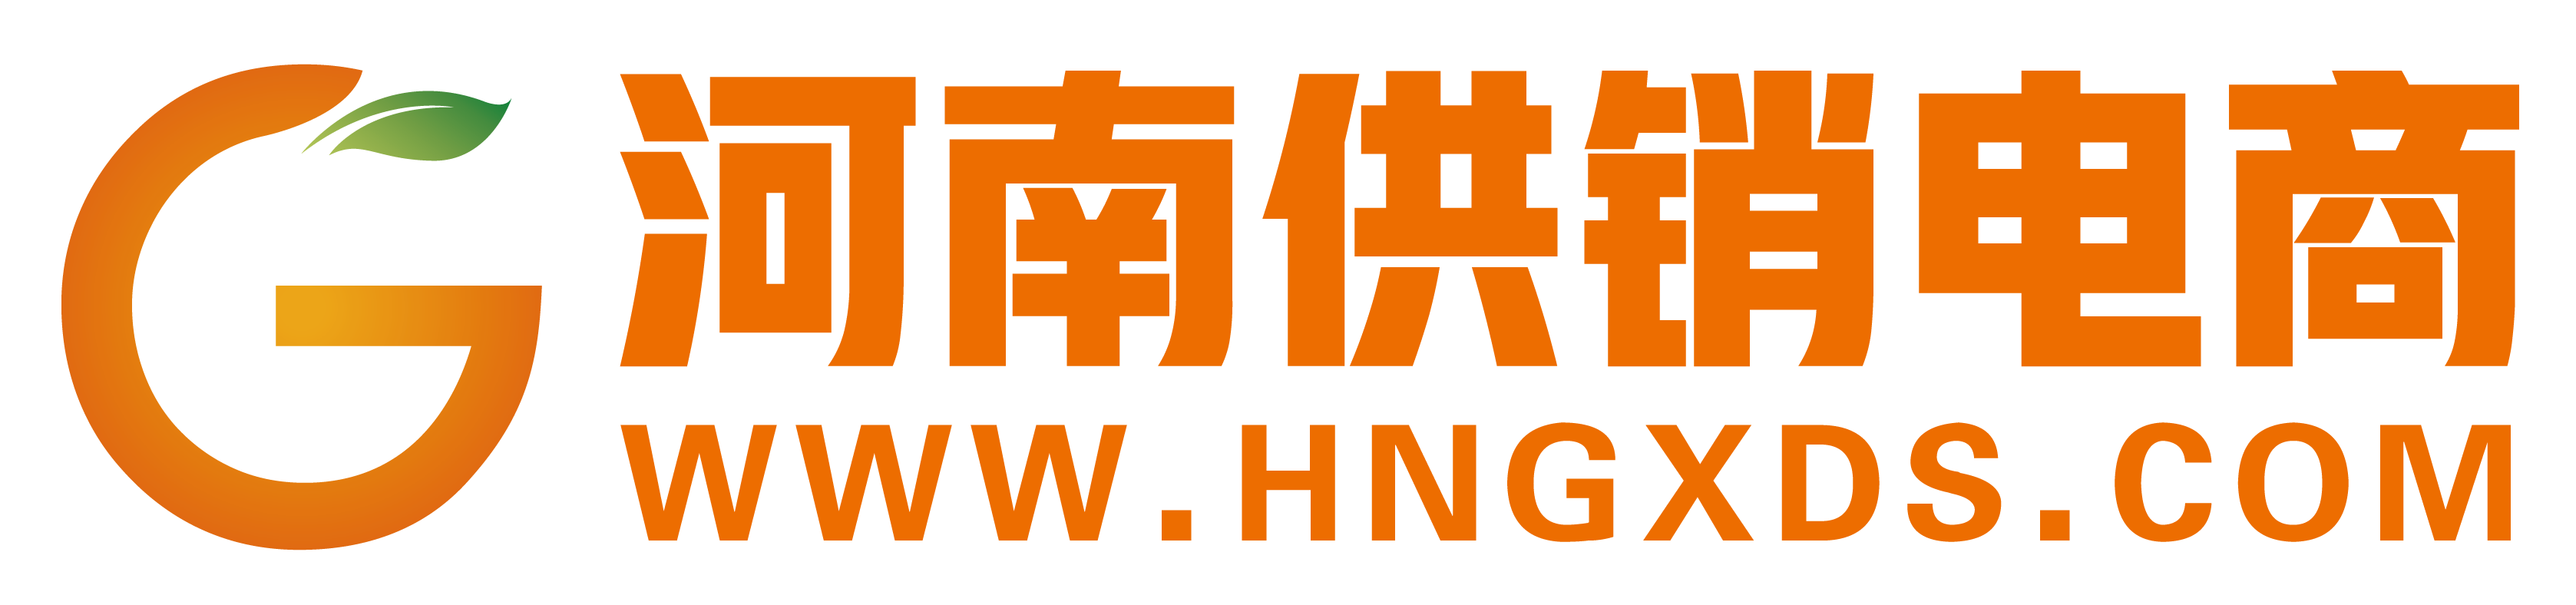 hngxds - 河南省供销电子商务有限公司